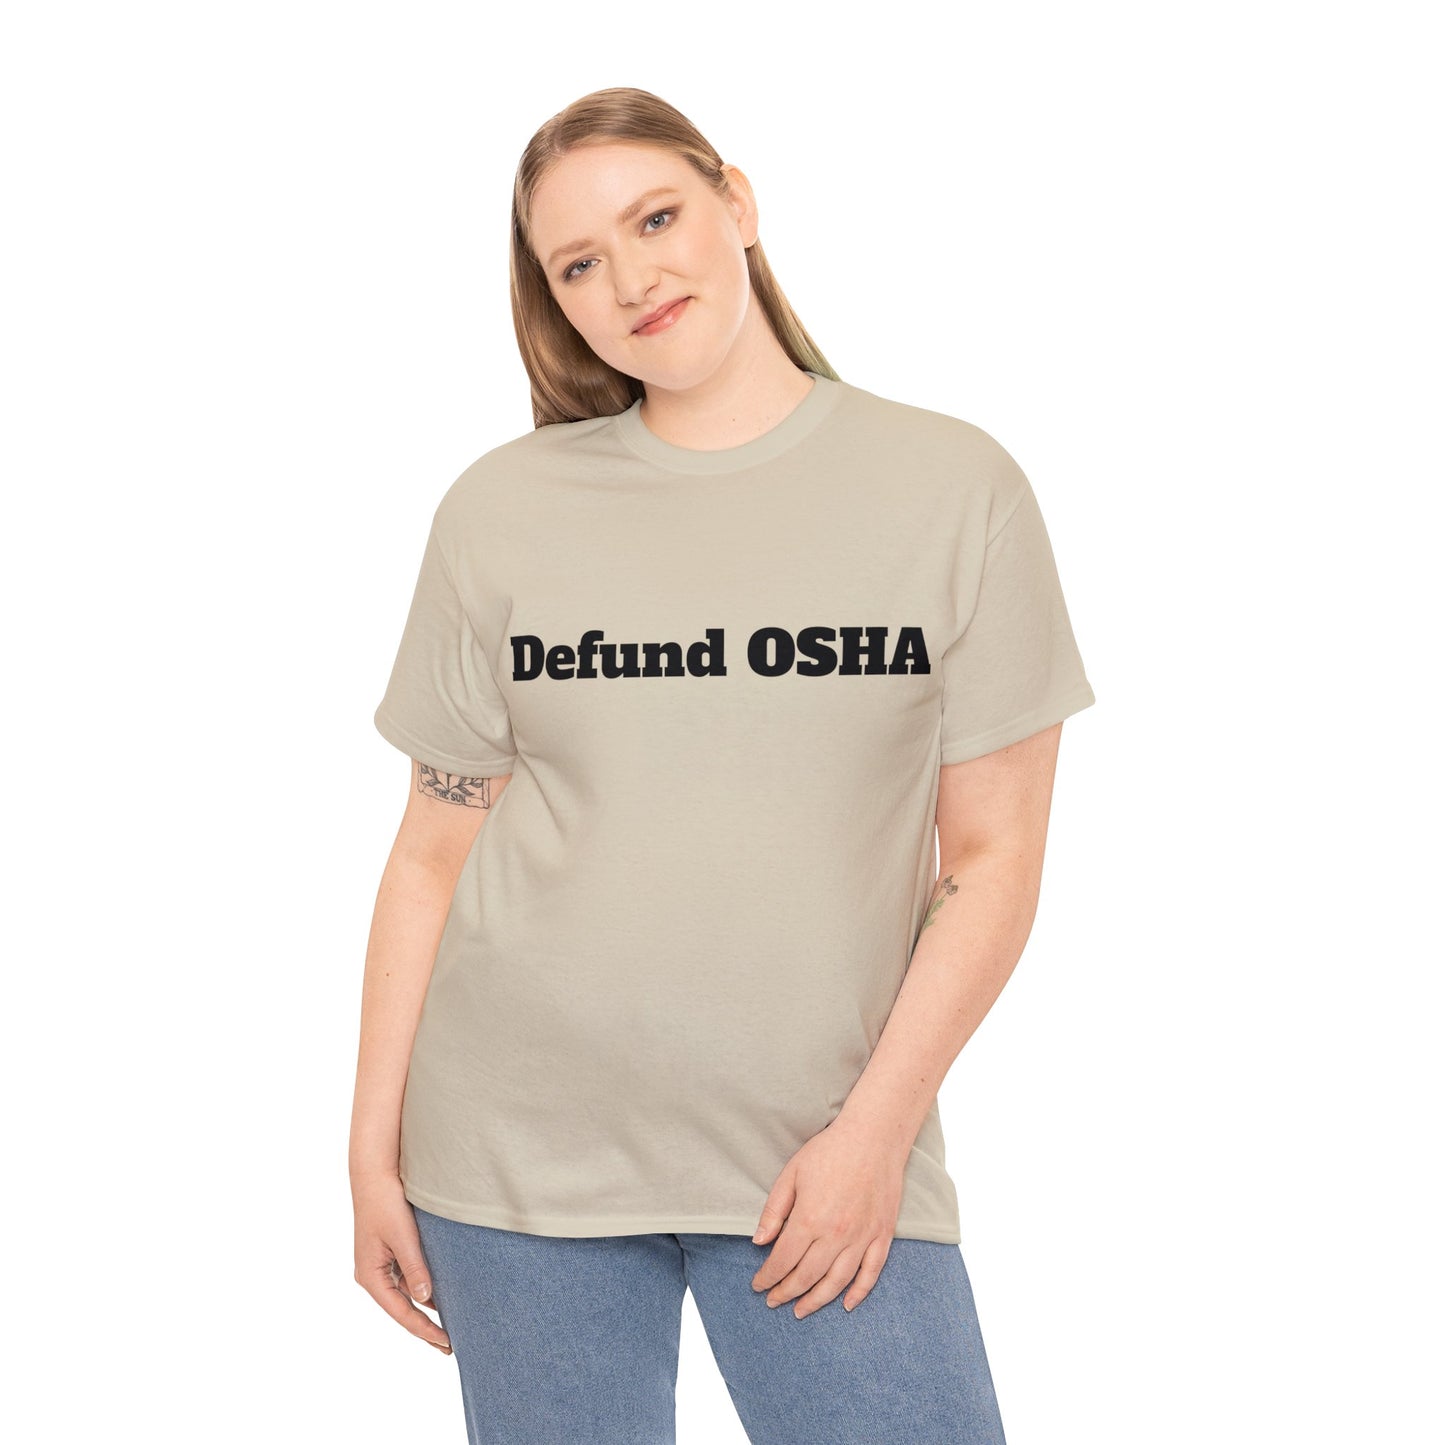 DeFund OSHA